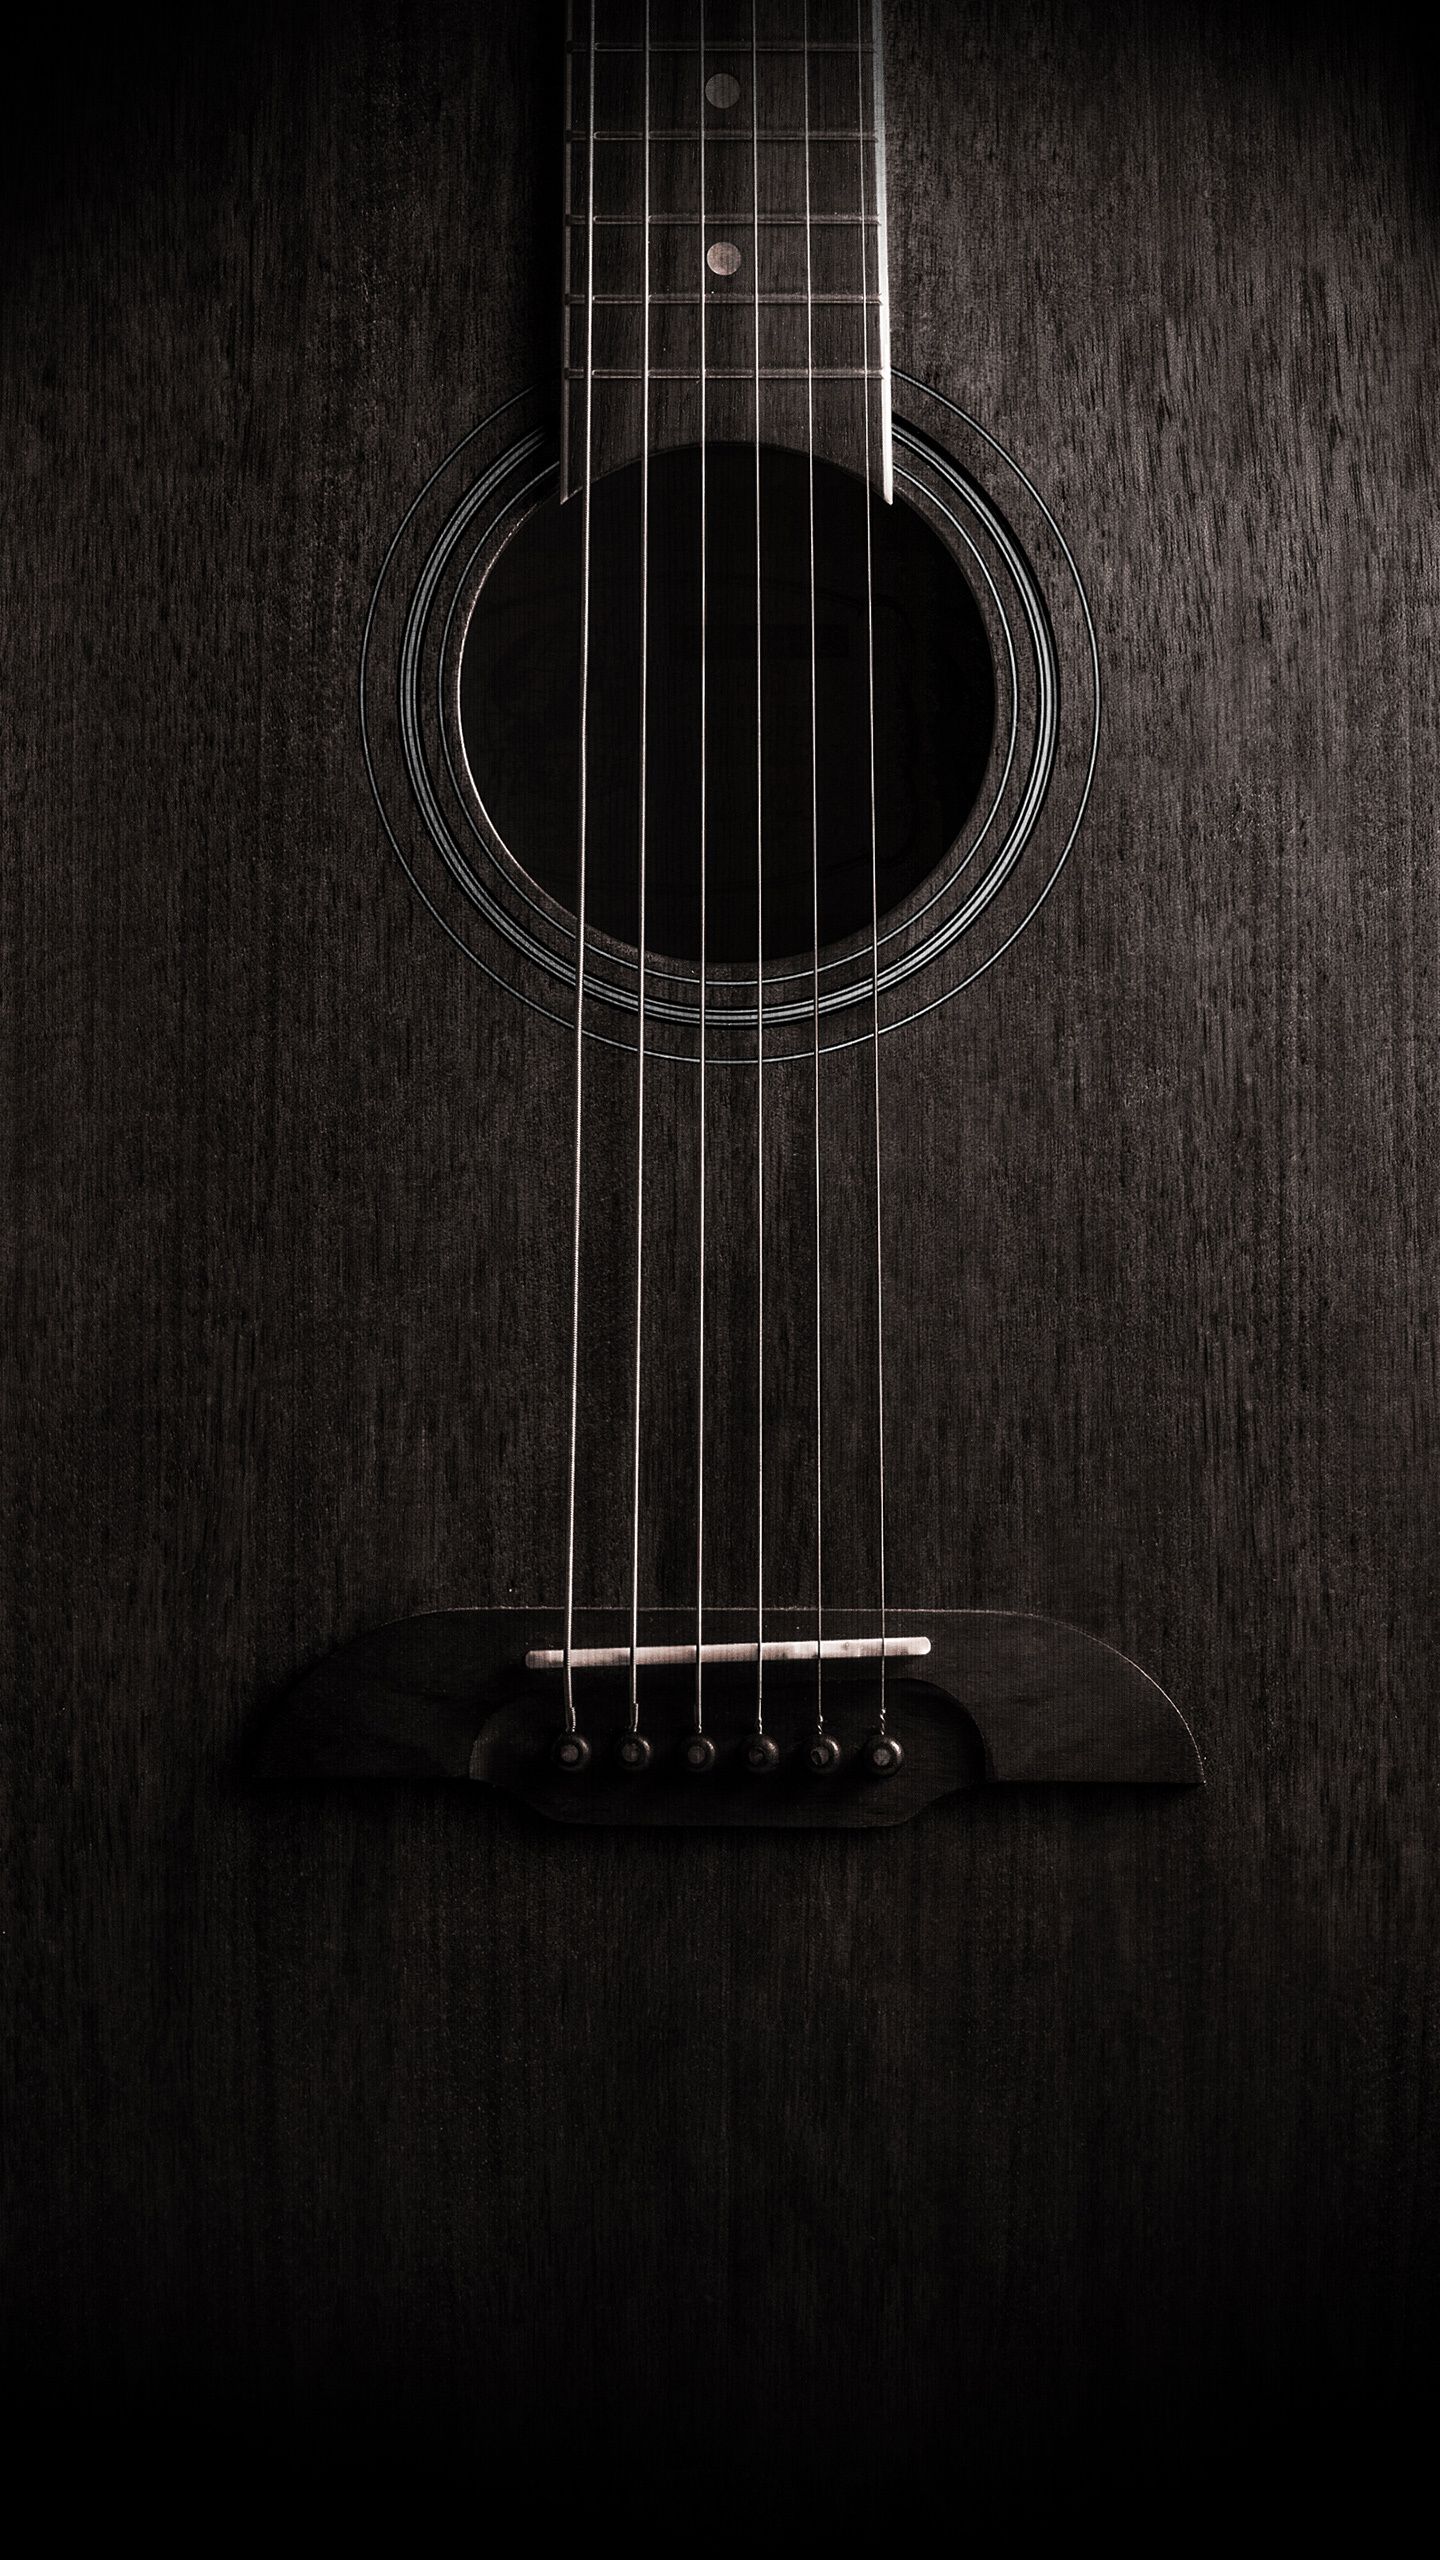 guitar wallpaper,guitar,string instrument,musical instrument,string instrument,plucked string instruments